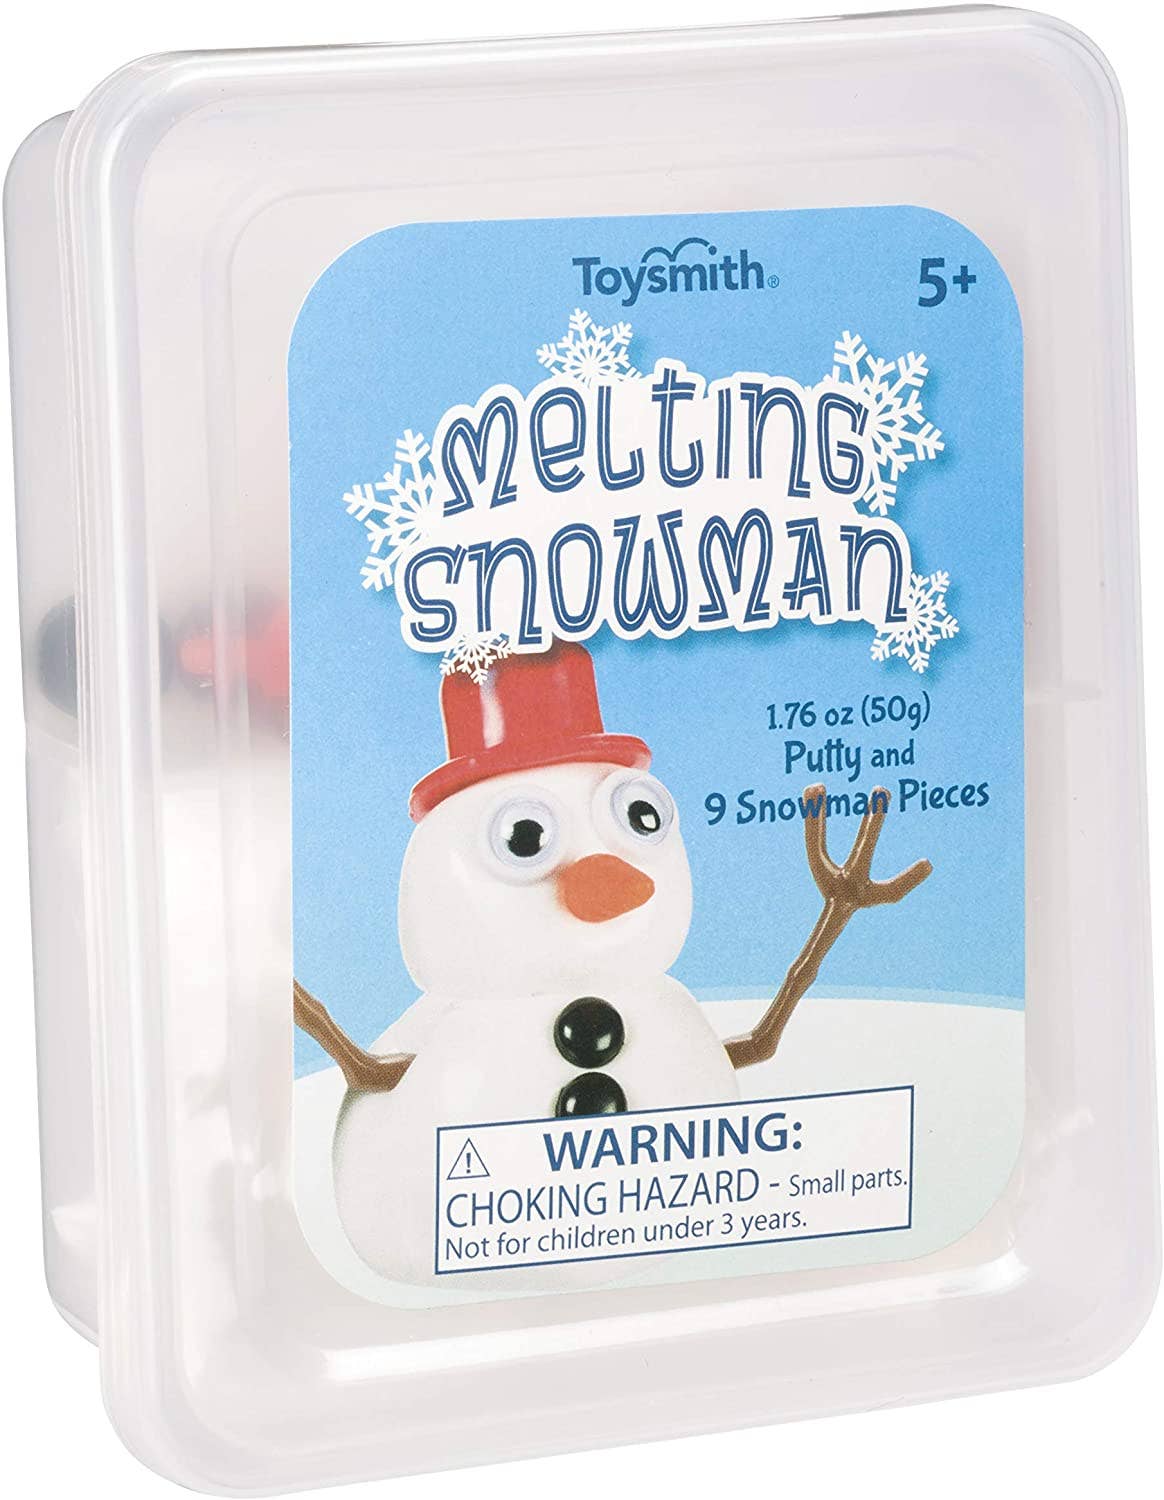 Original Fun Factory Melting Putty Snowman